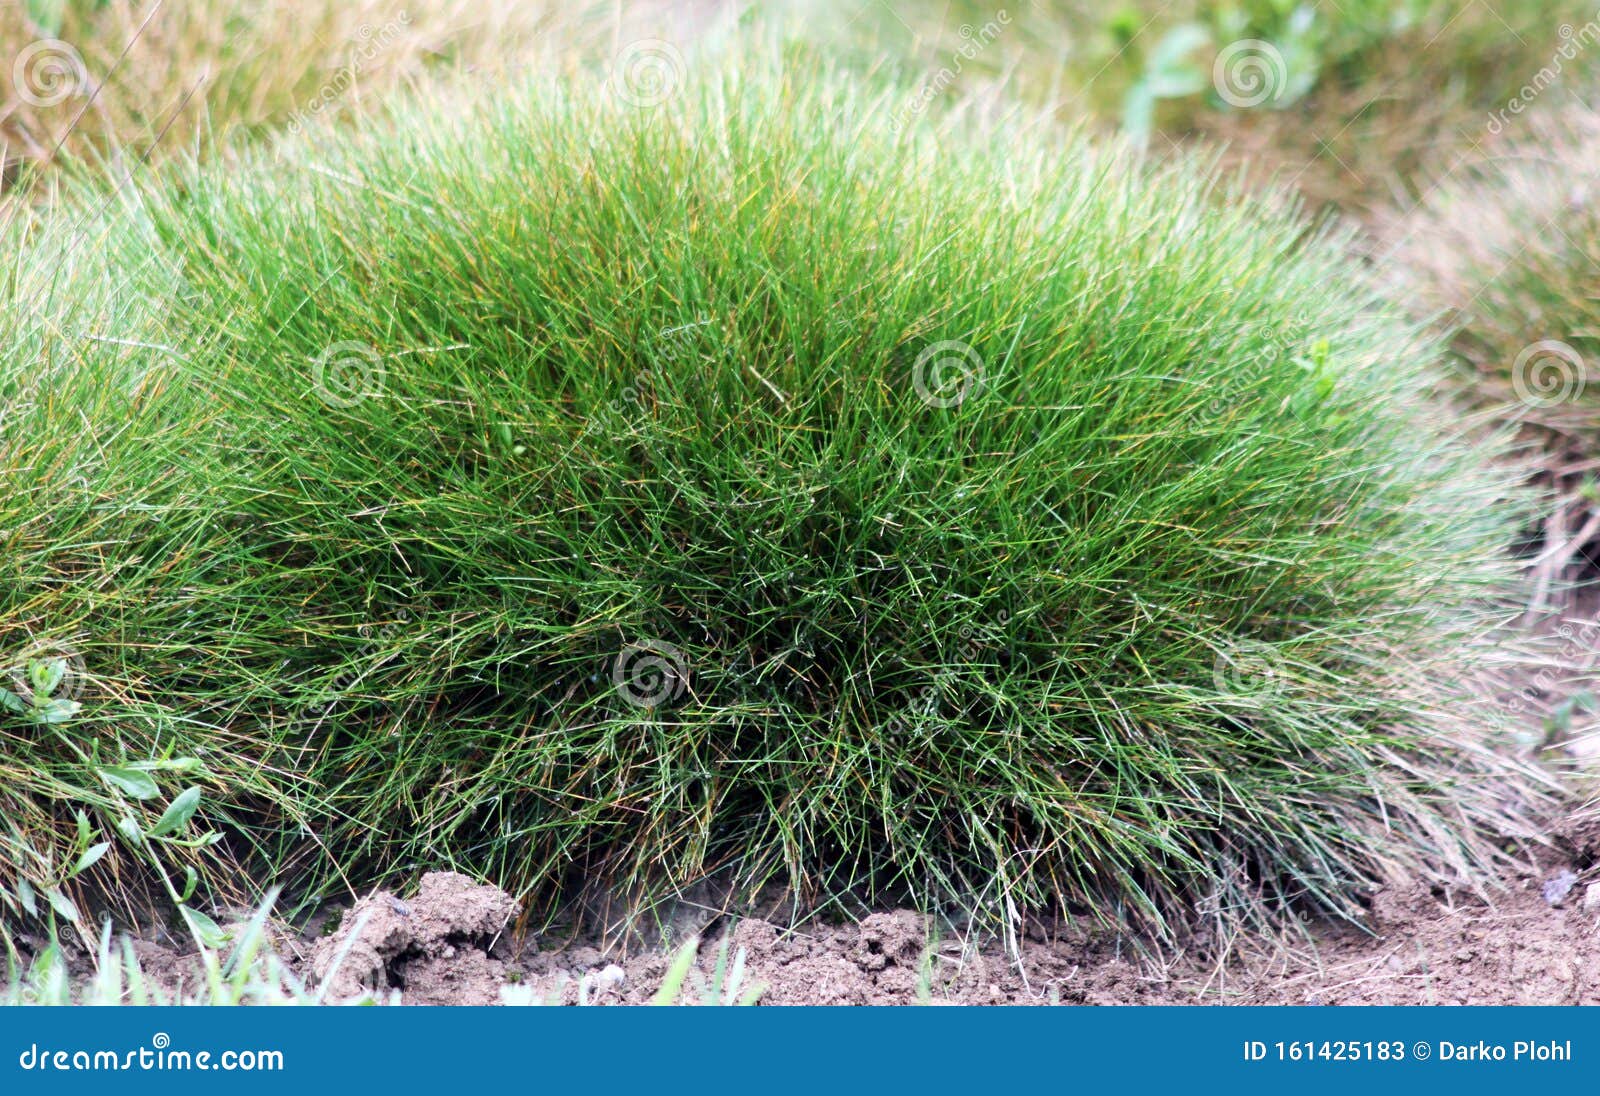 ornamental grasses bear plant festuca gautieri